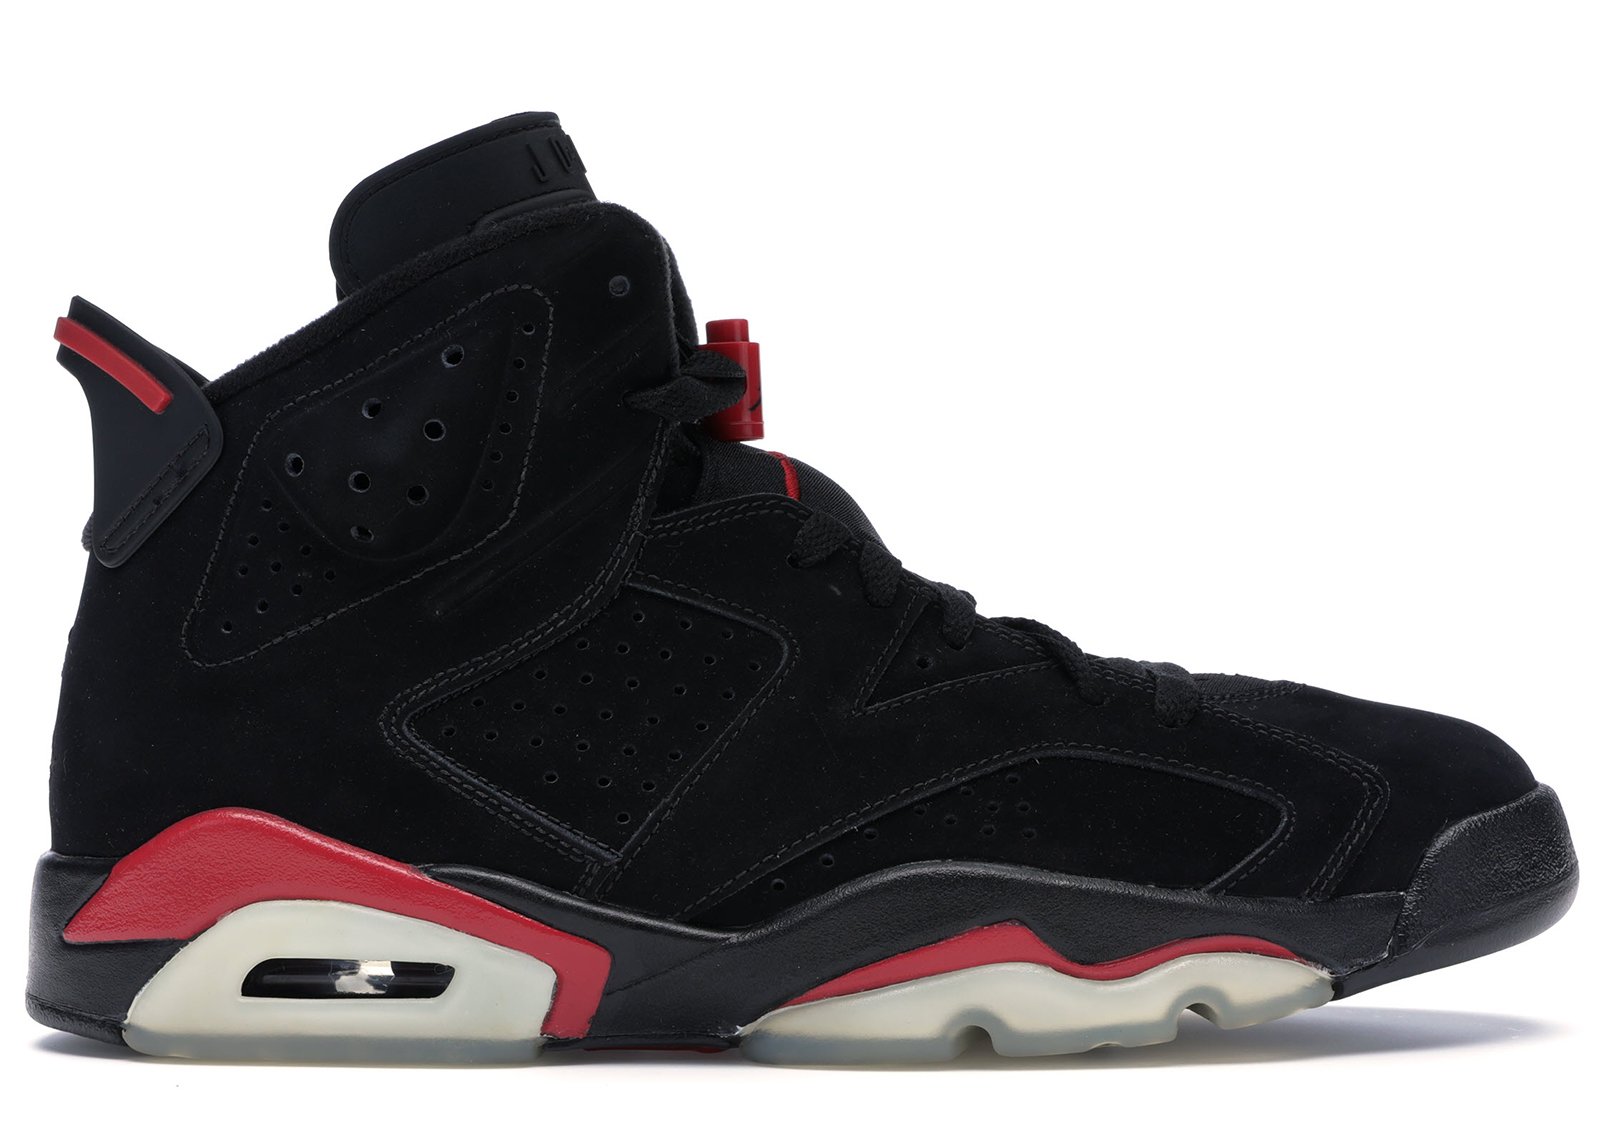 Jordan 6 Retro Black Varsity Red (2010) sneakers